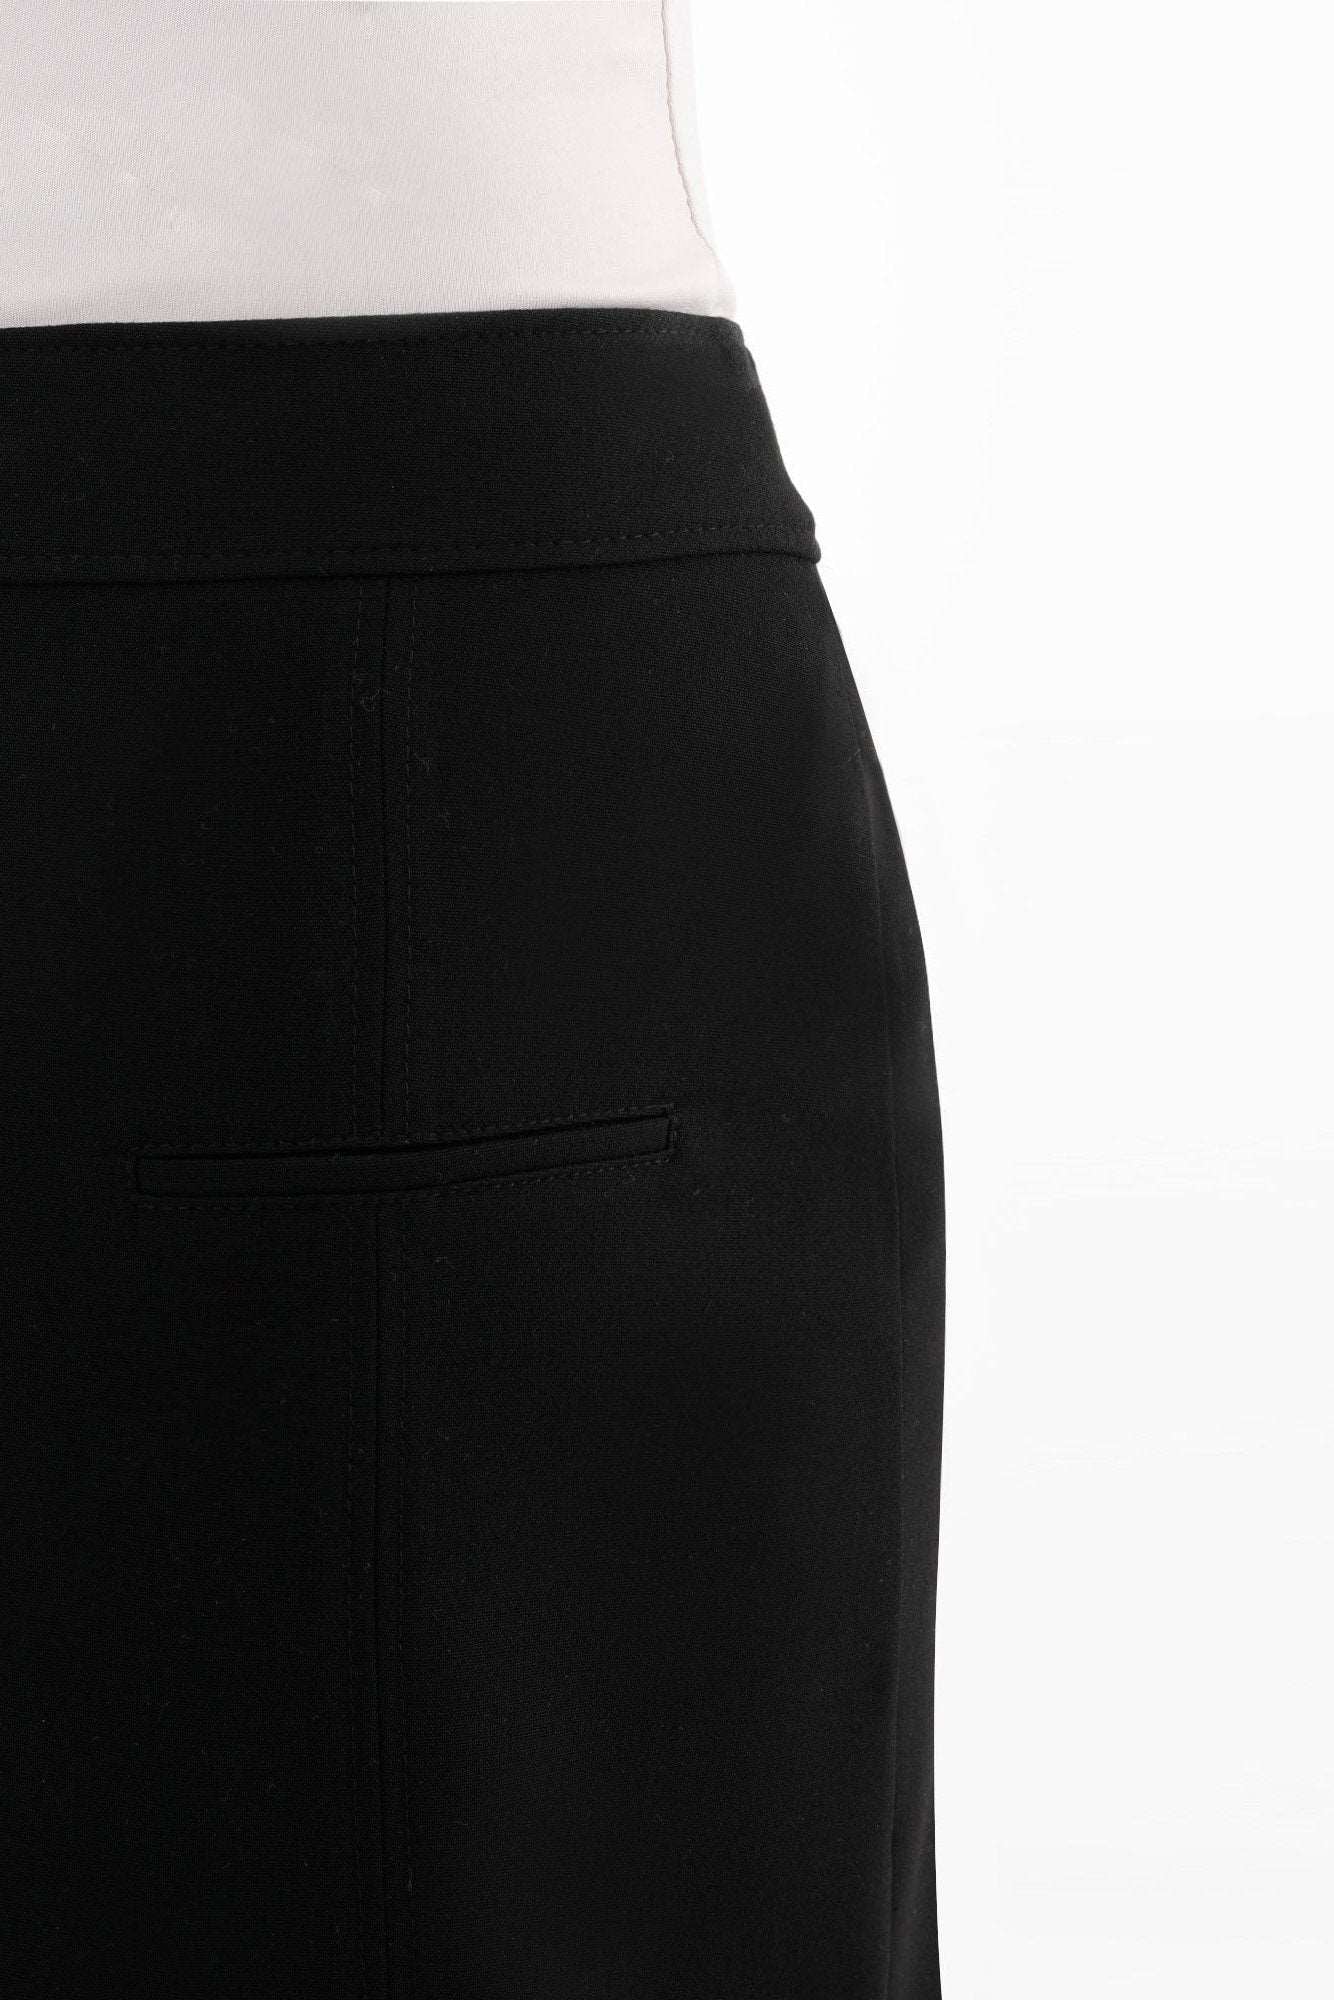 Black Straight A-Line Midi Skirt G-Line